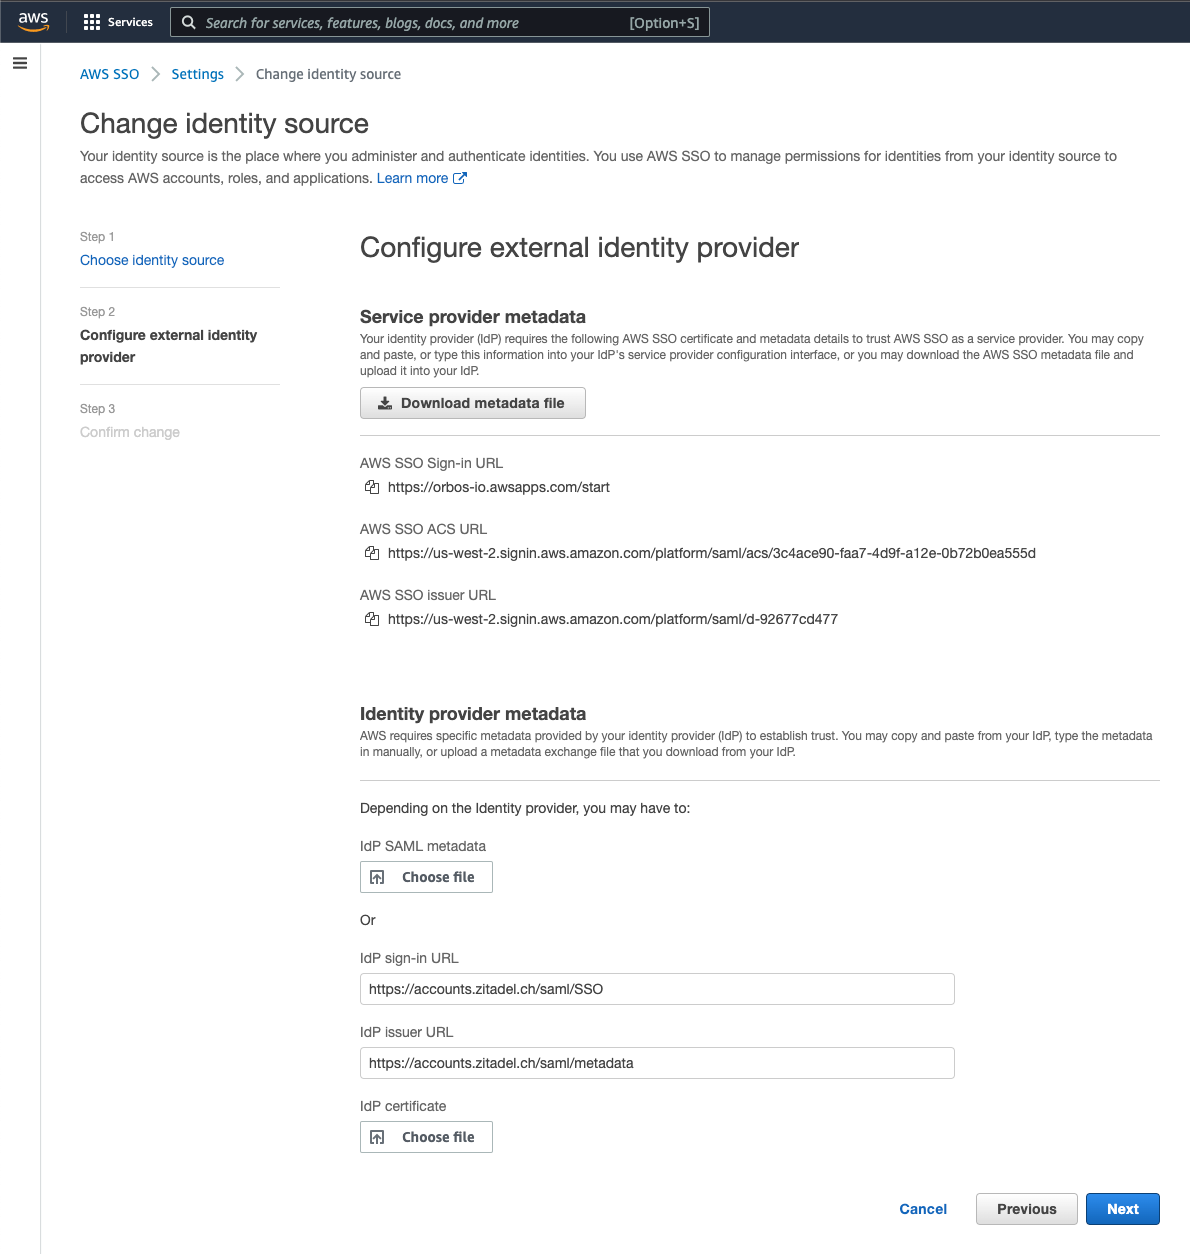 Configure external identity provider